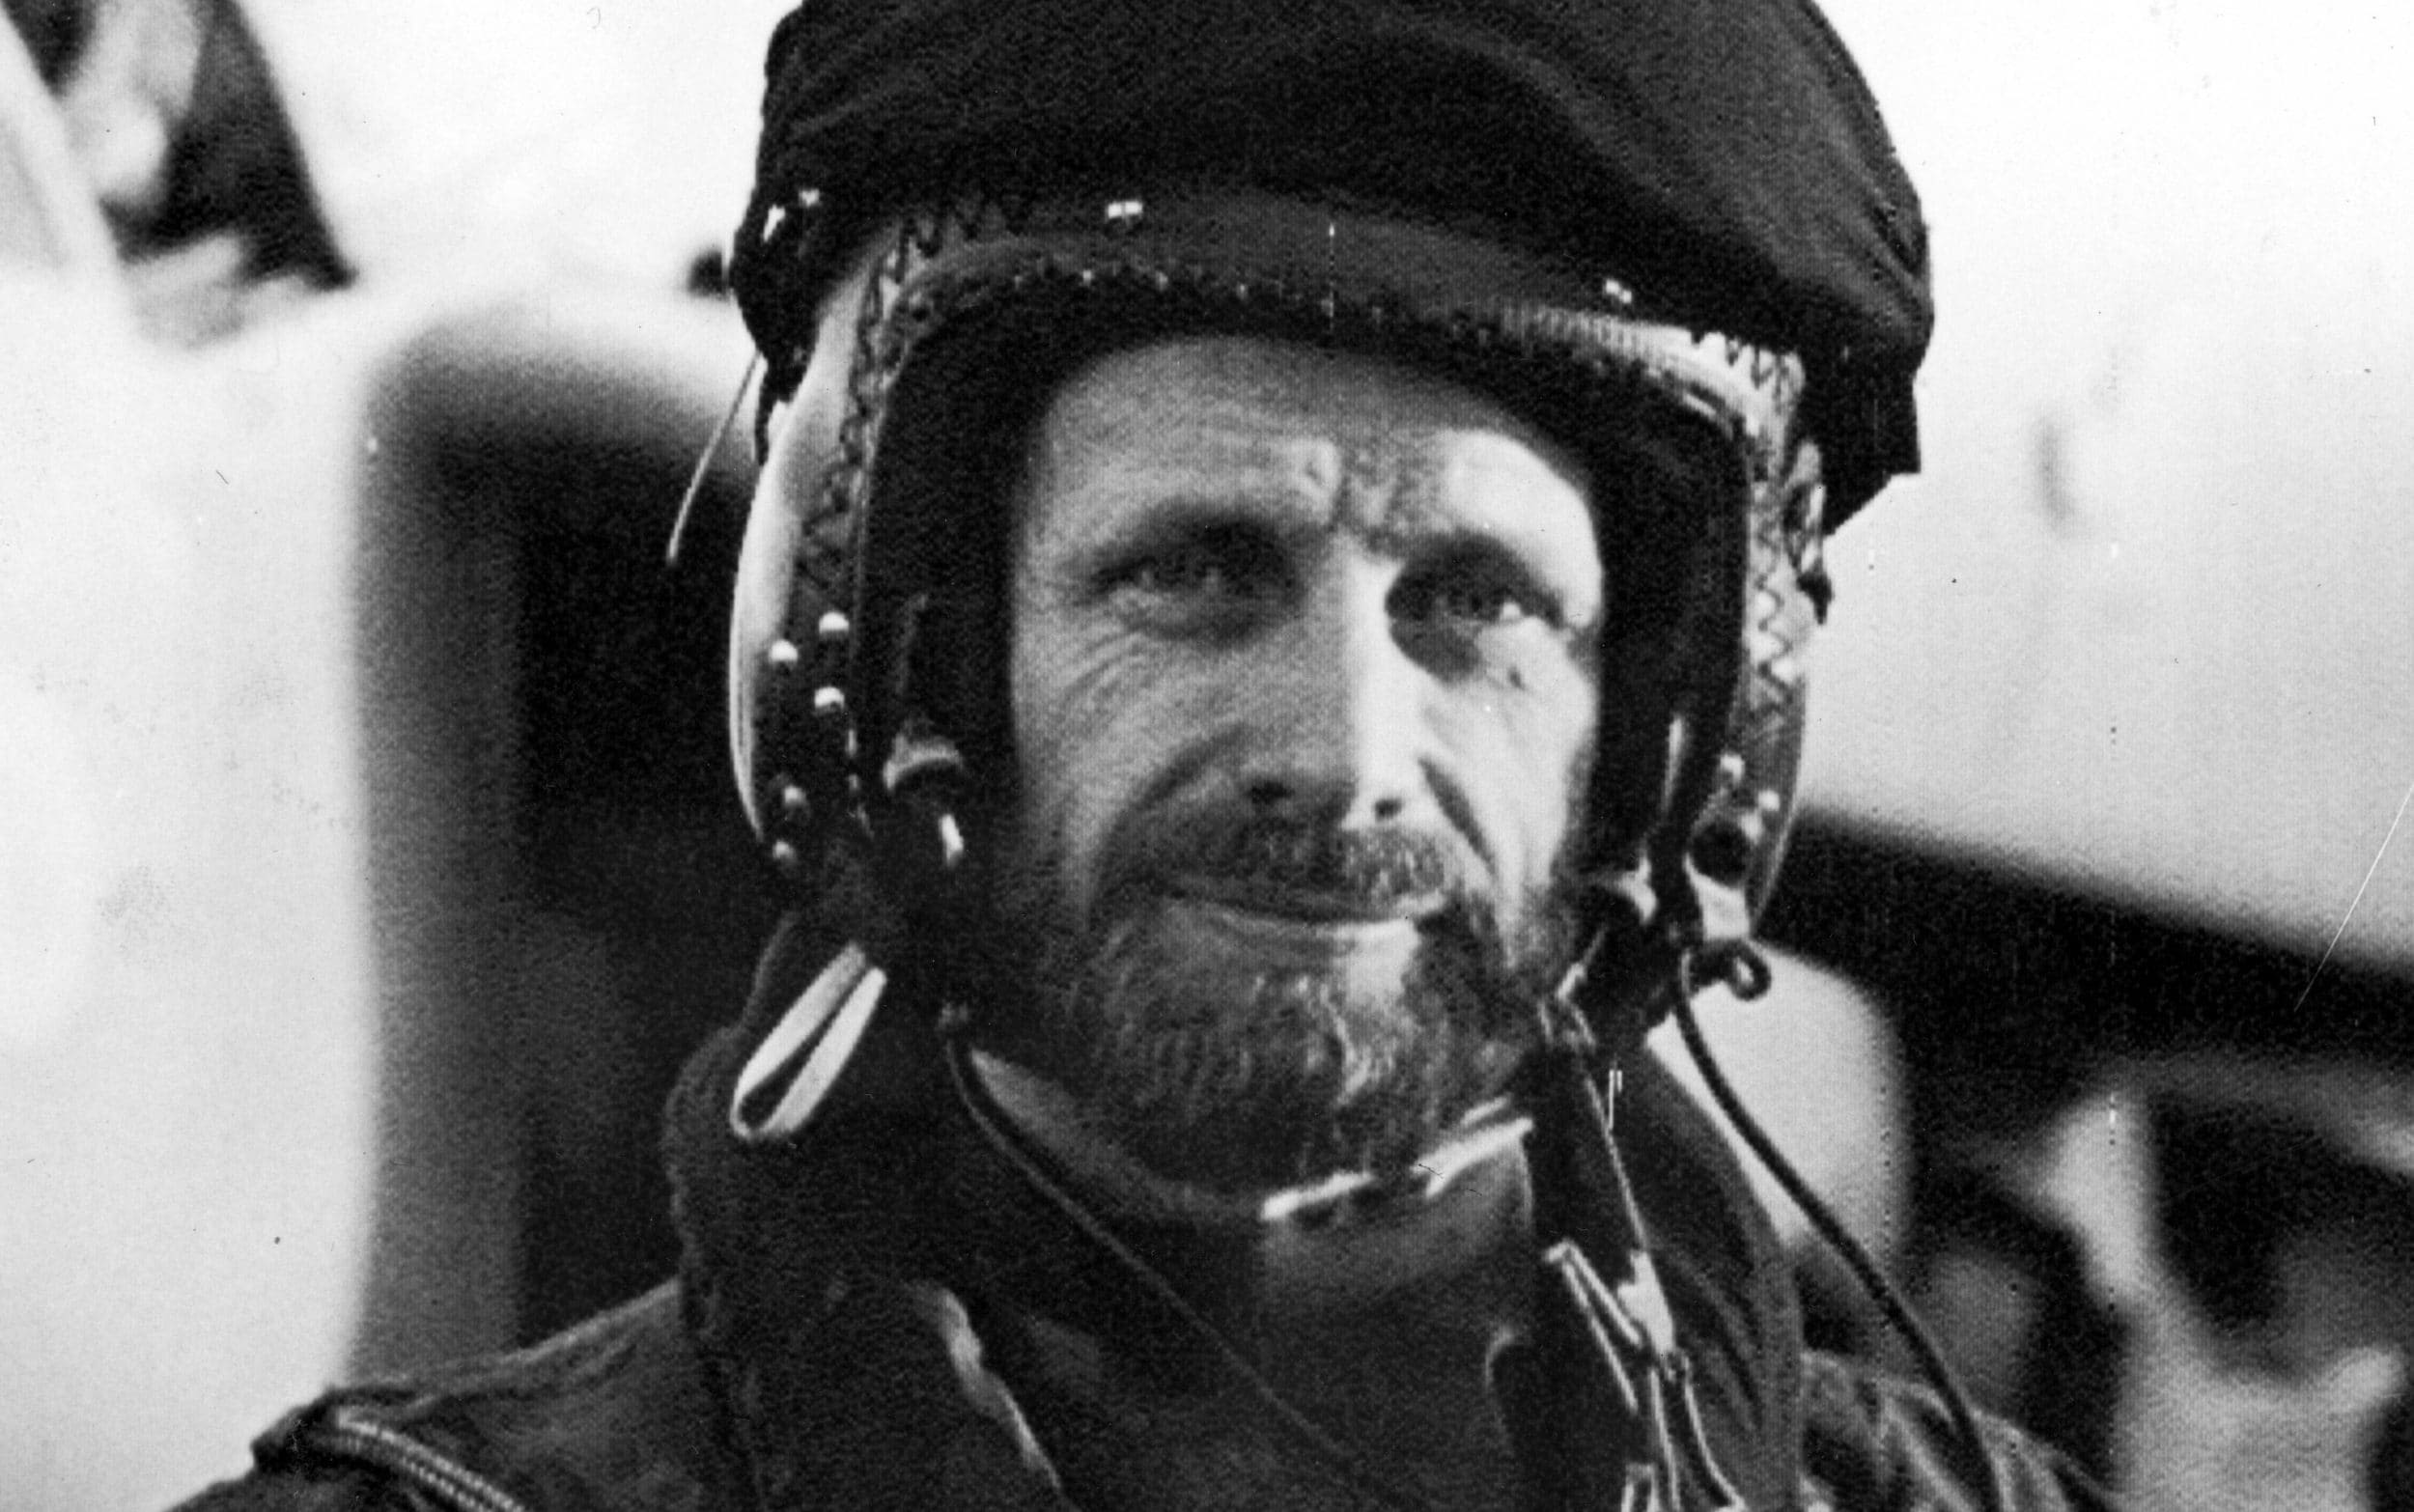 Commander ‘Sharkey’ Ward, fearless ‘top gun’ pilot decorated in the Falklands War – obituary